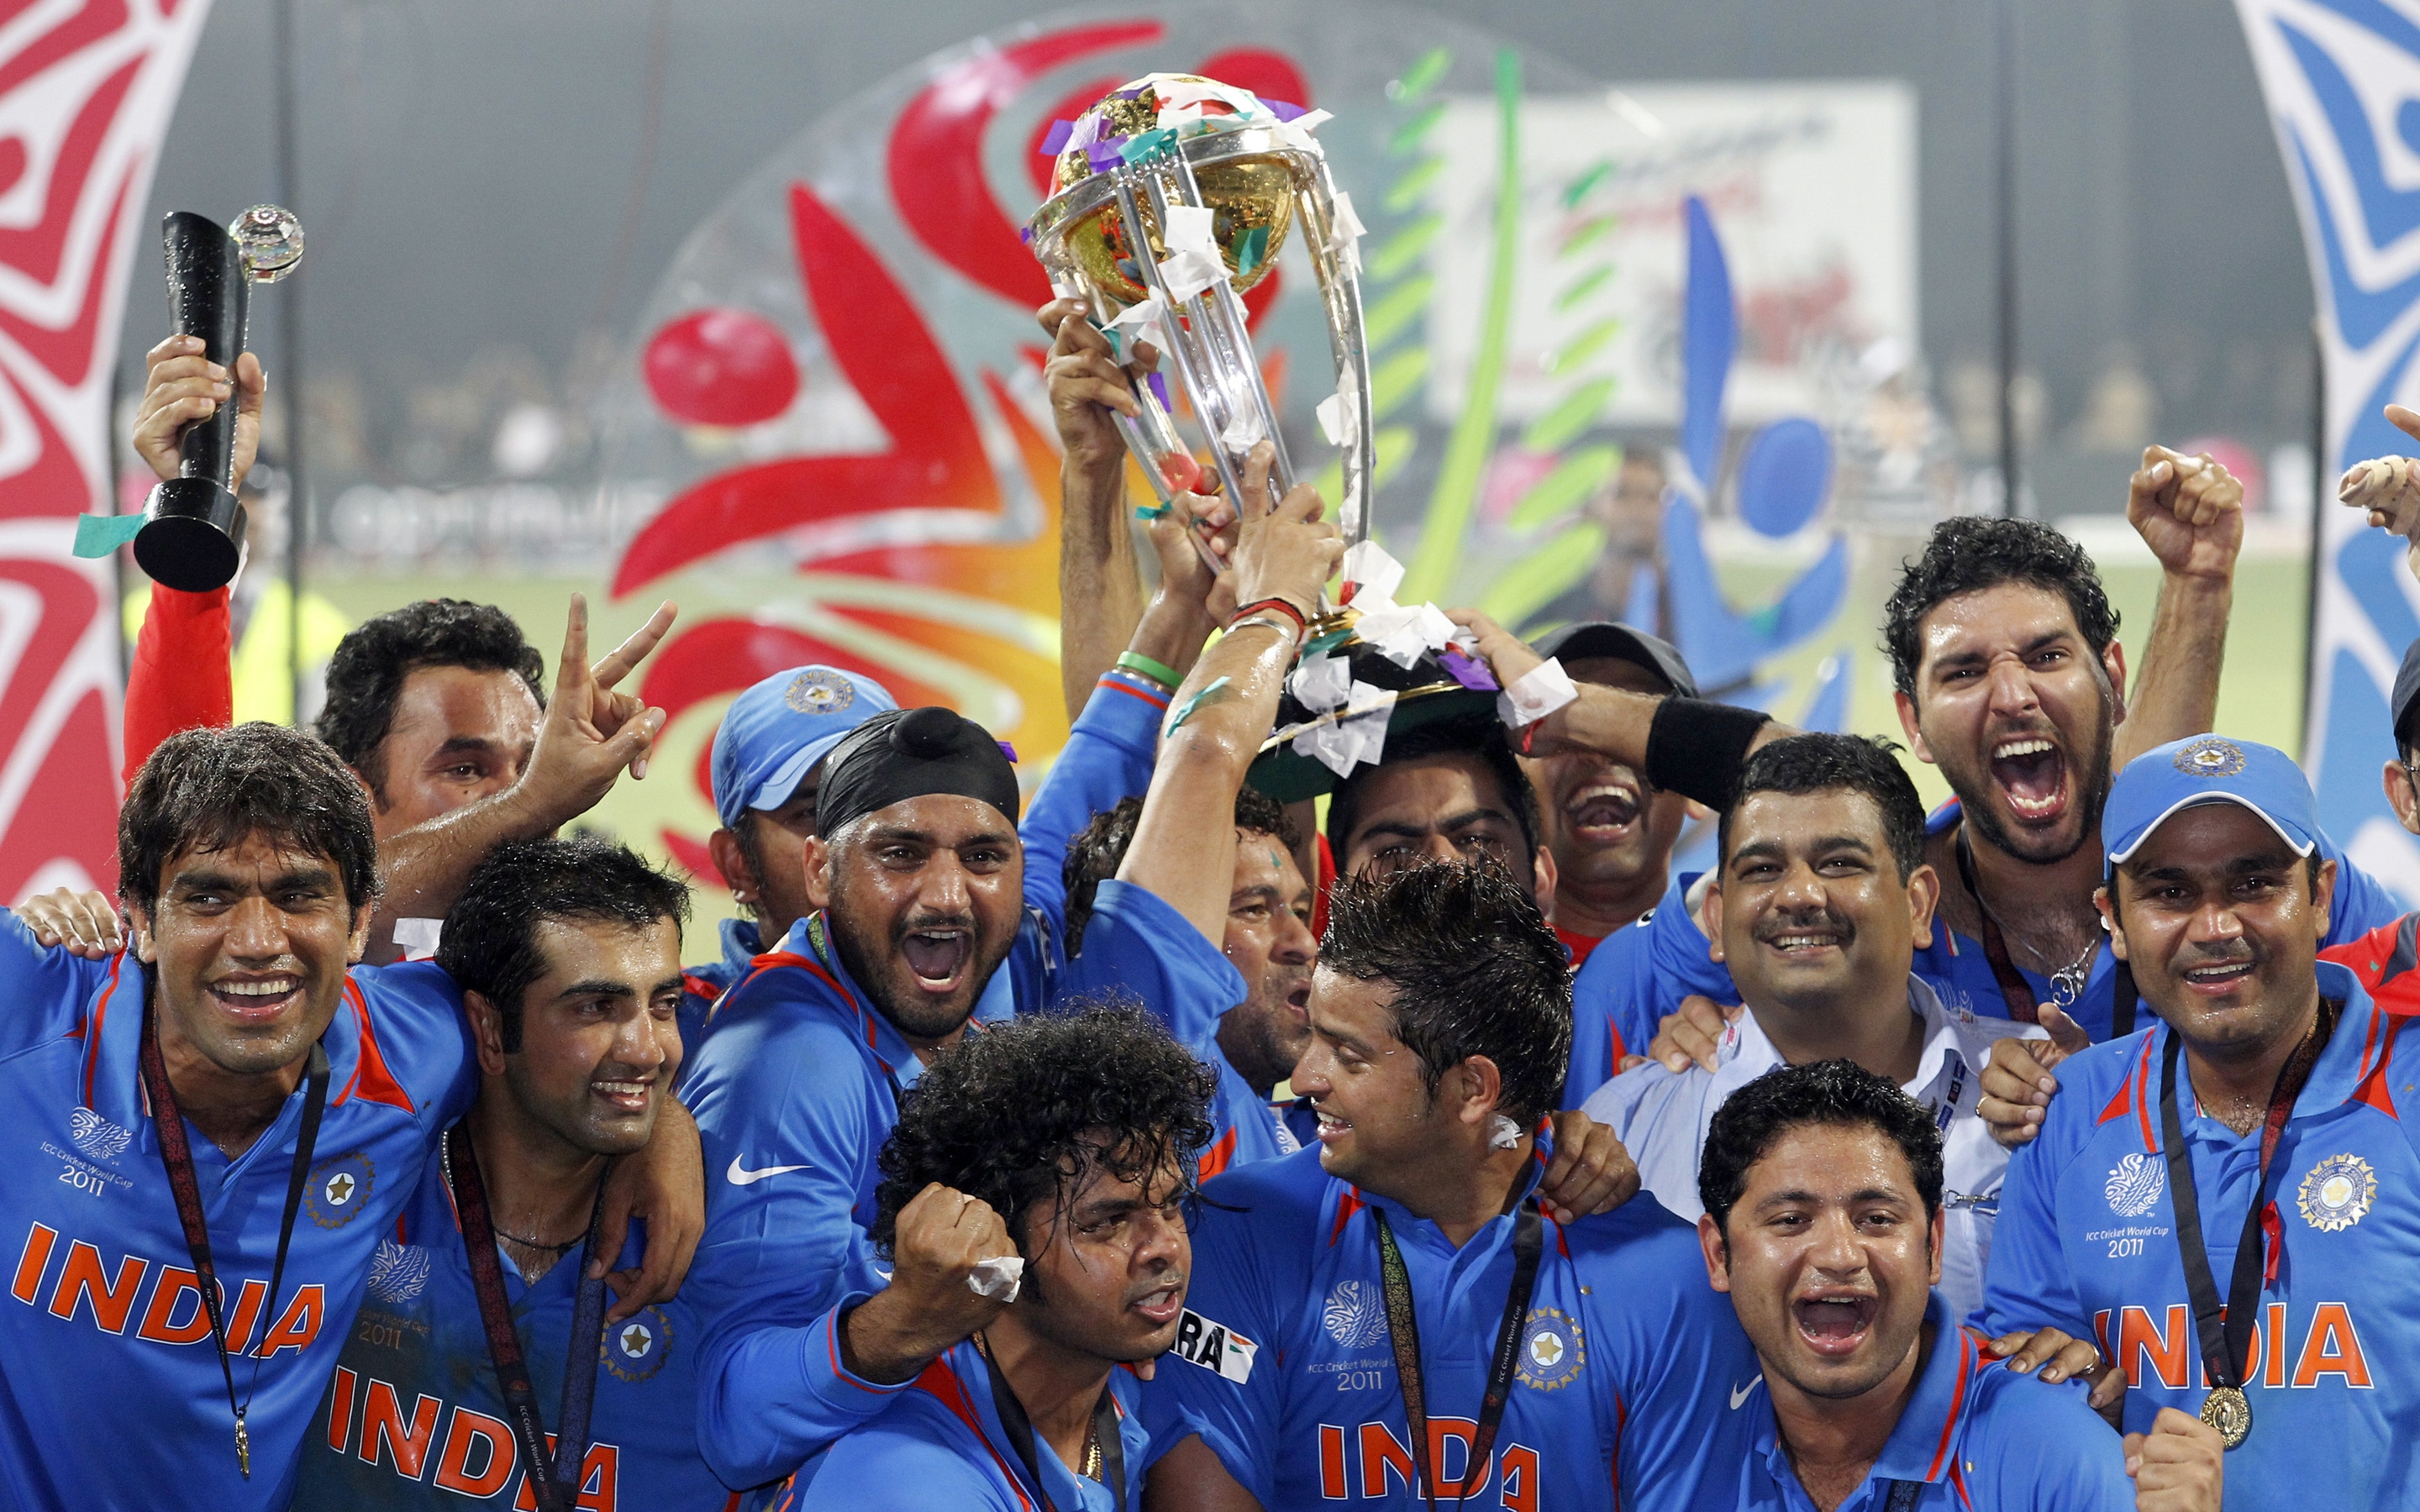 Cricket India Team for 2880 x 1800 Retina Display resolution